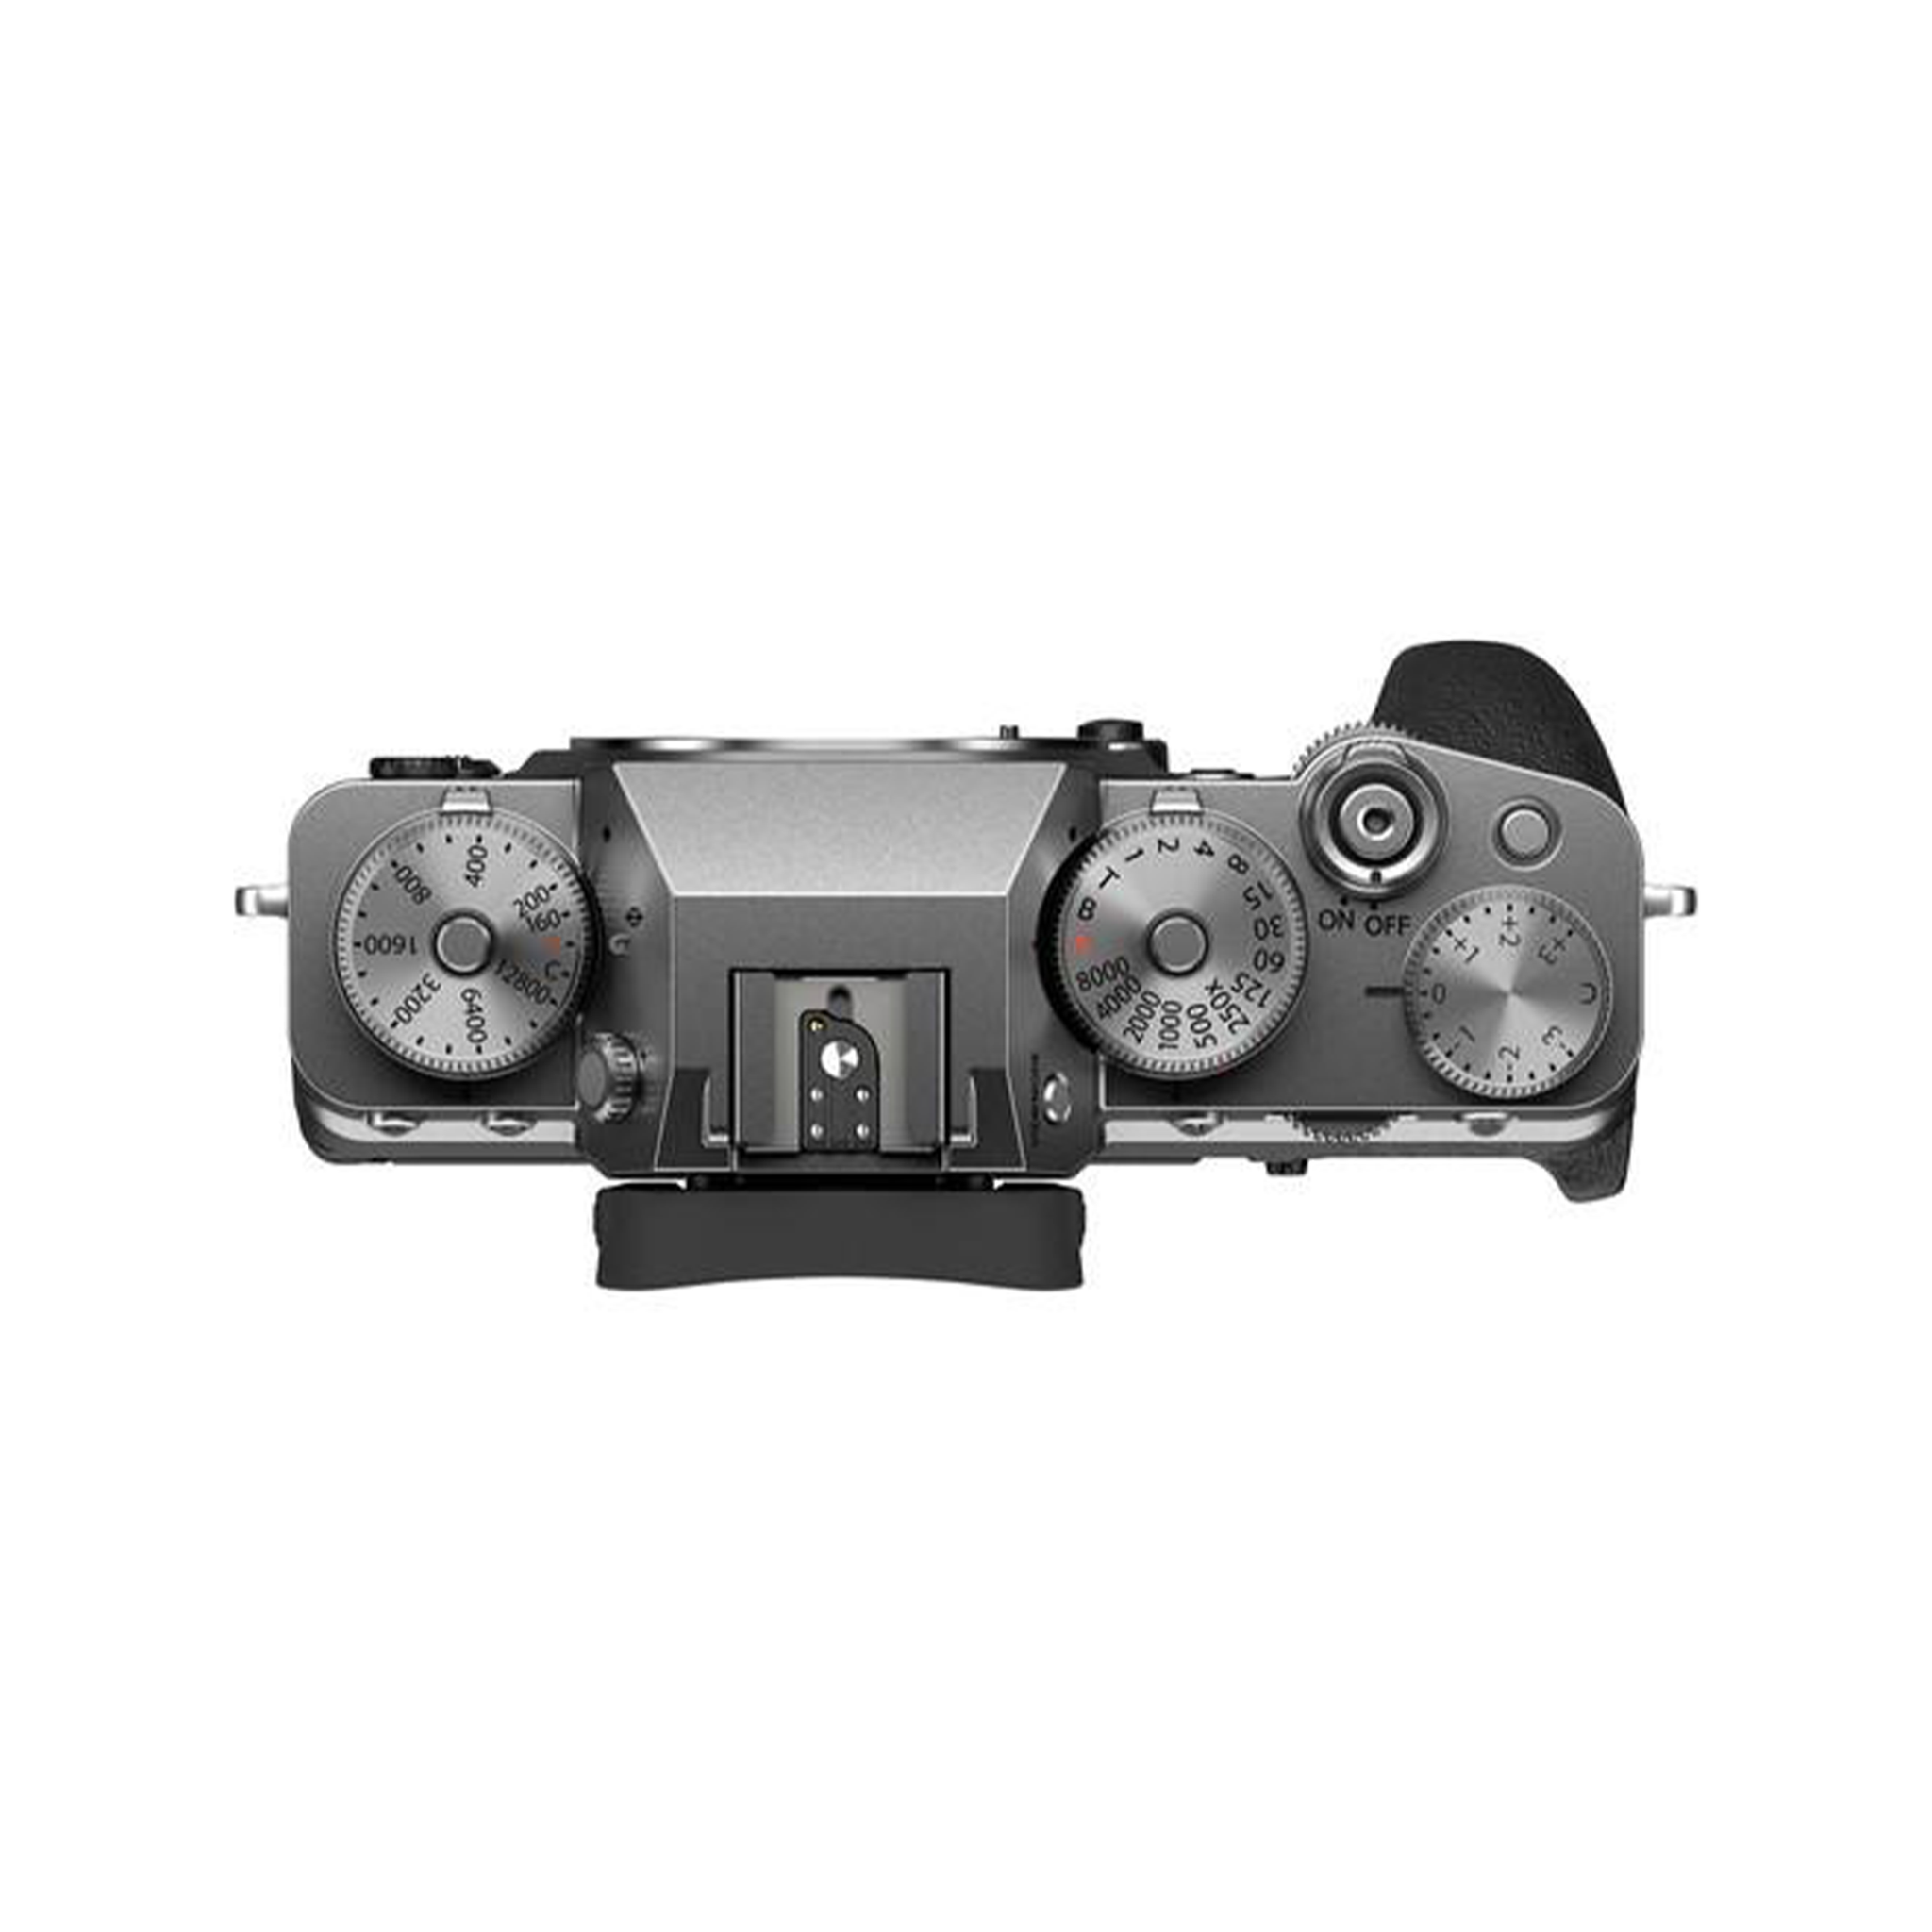 Fujifilm X-T4 Mirrorless Digital Camera (Free Extreme Pro 32GB SD Card)-Mirrorless-futuromic